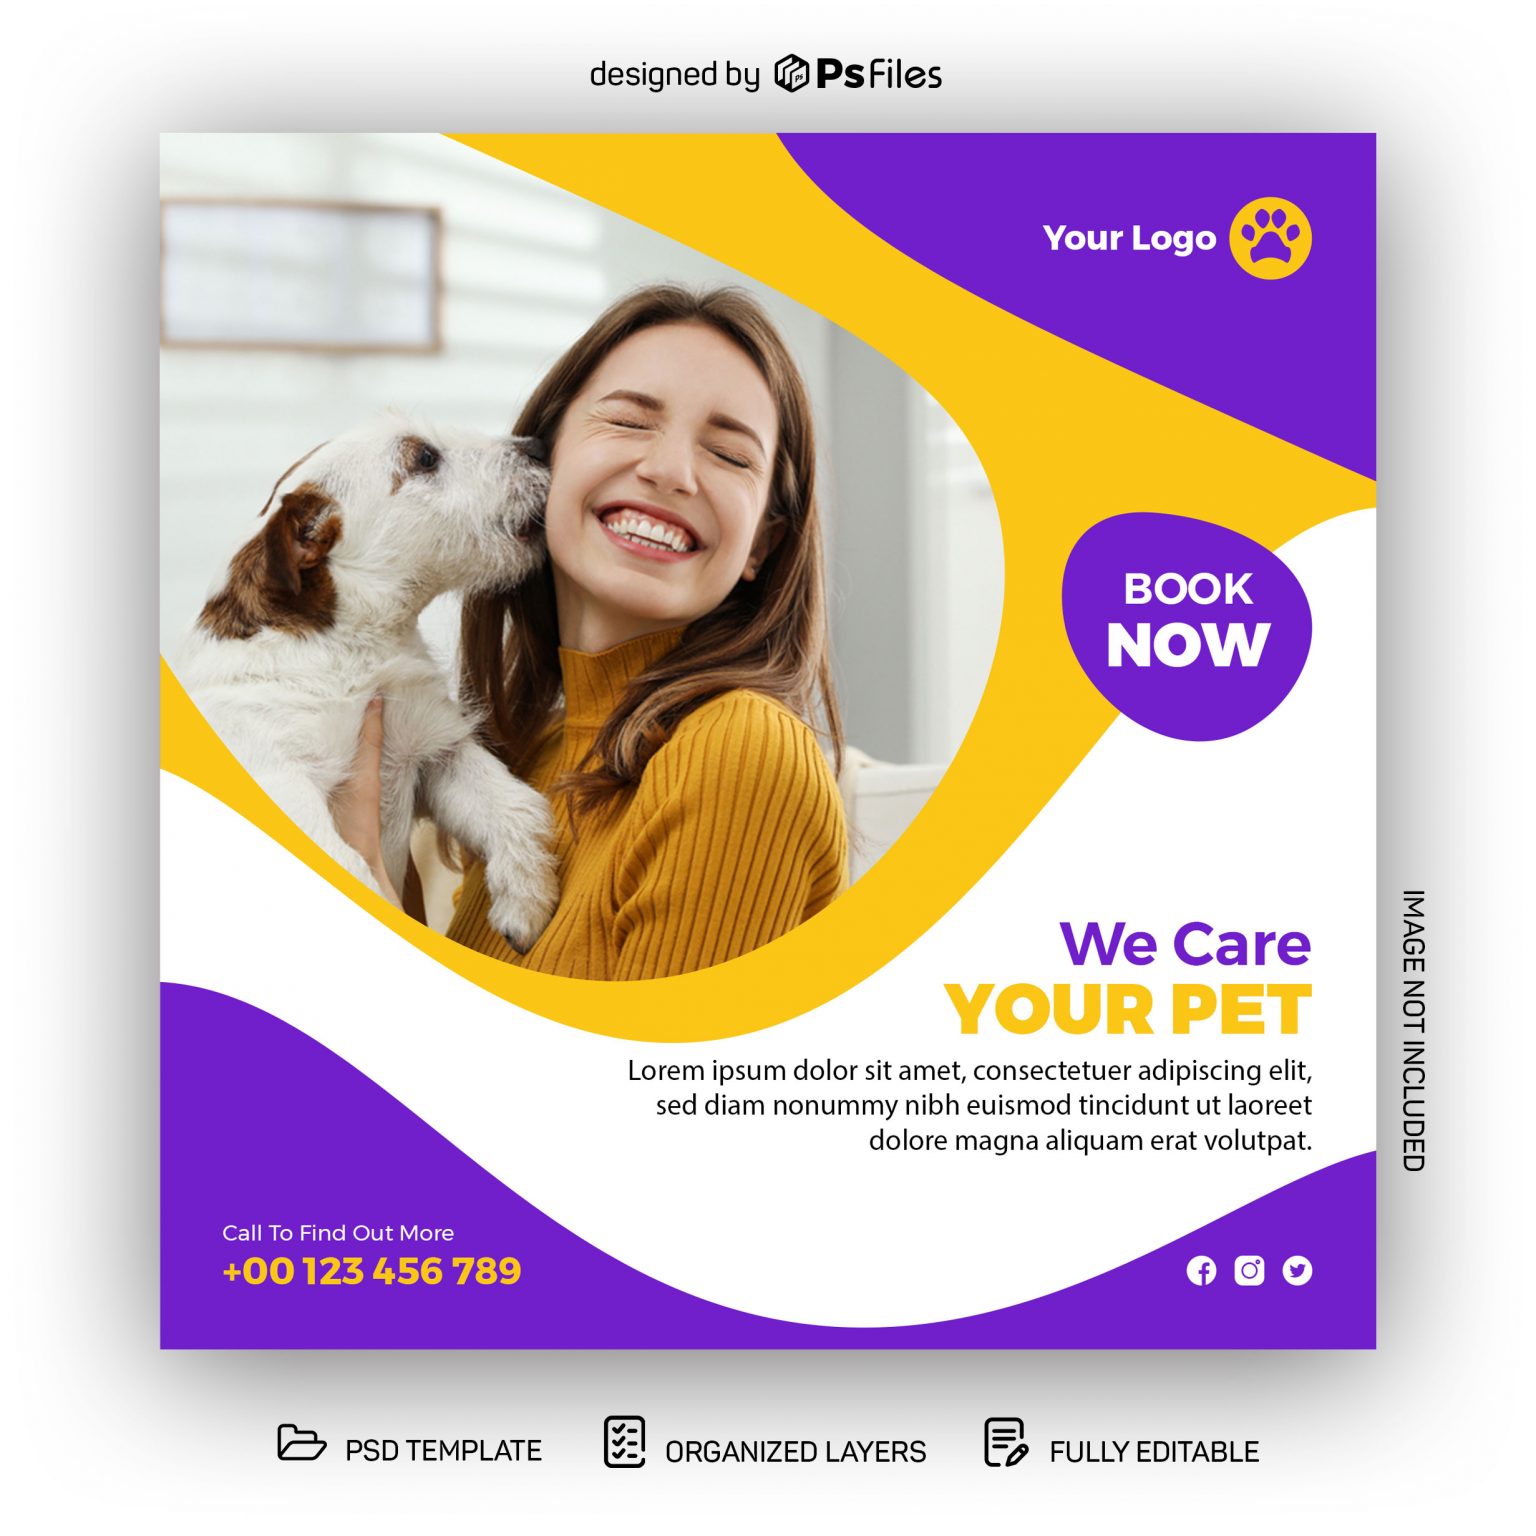 Pets Care Center Instagram Post Design Template PSD Free Download